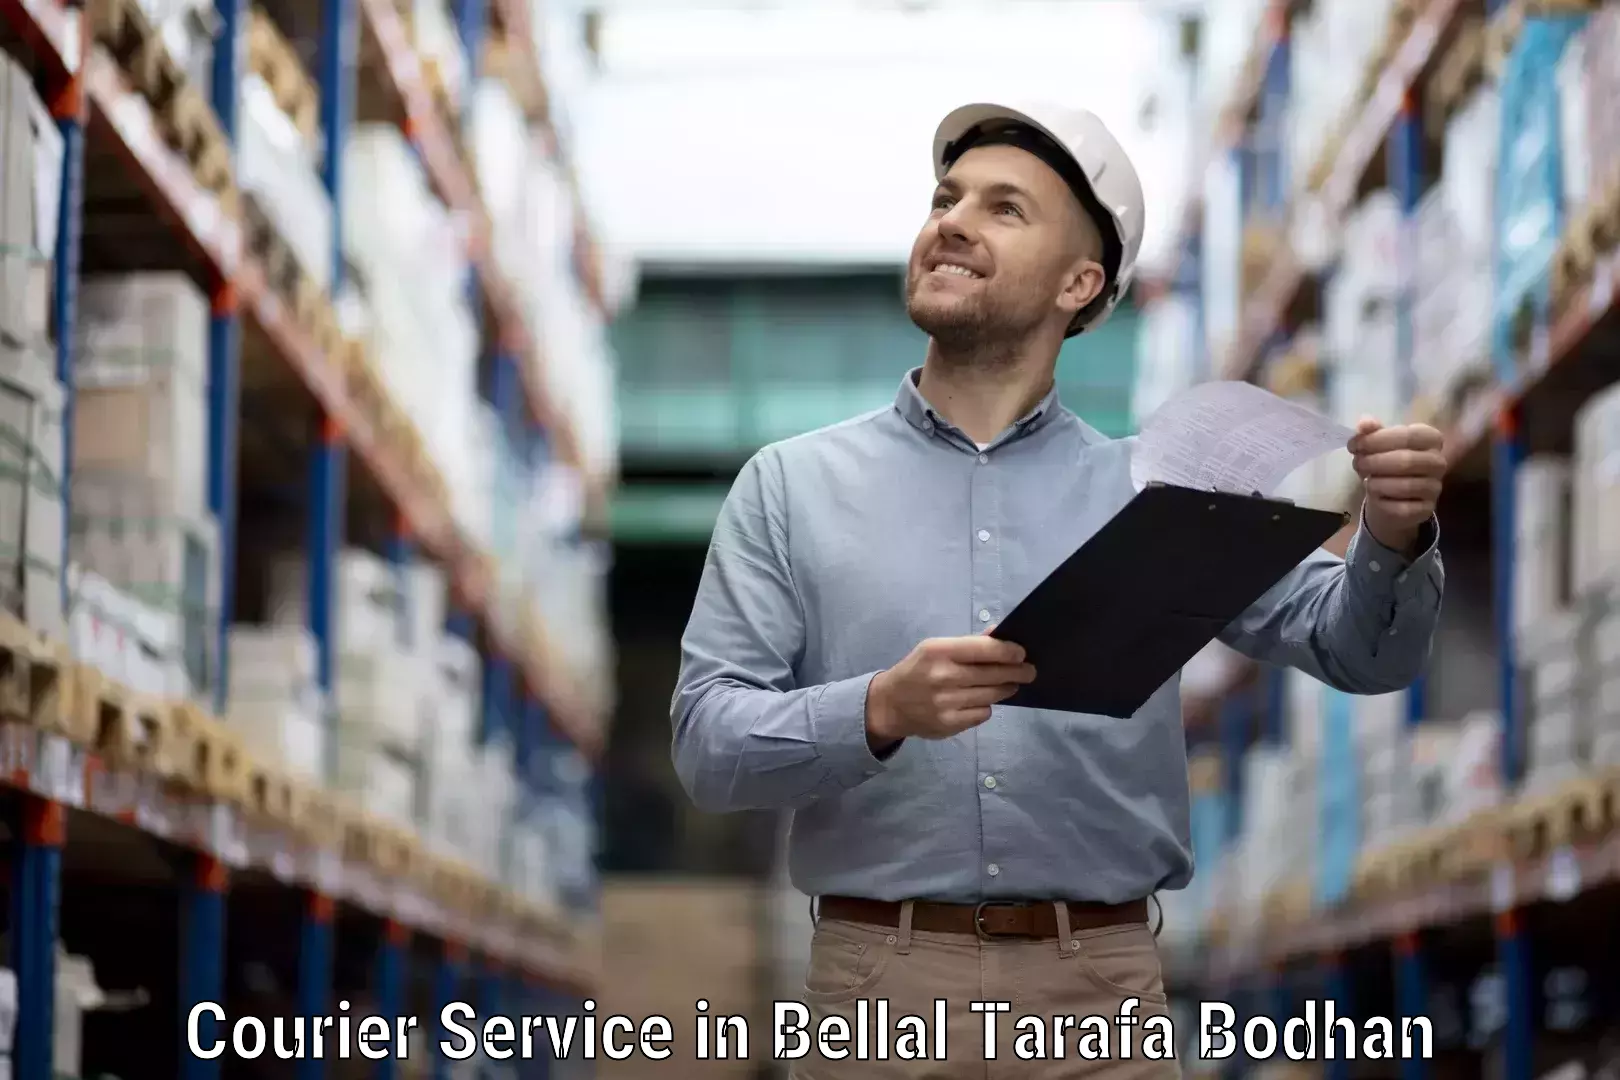 Logistics efficiency in Bellal Tarafa Bodhan